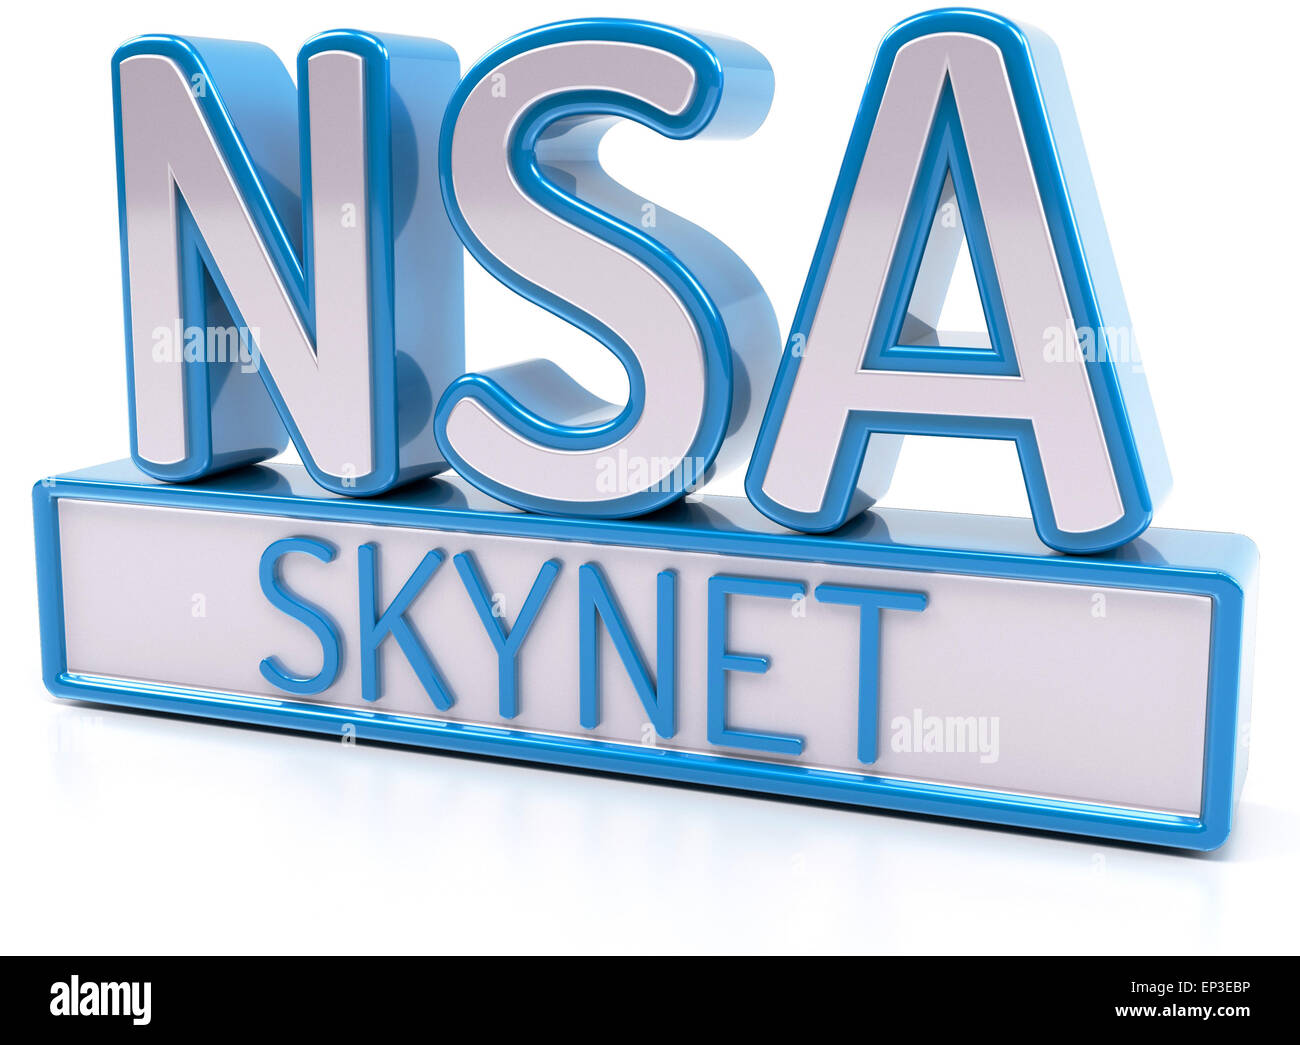 NSA SKYNET - National Security Agency Stock Photo